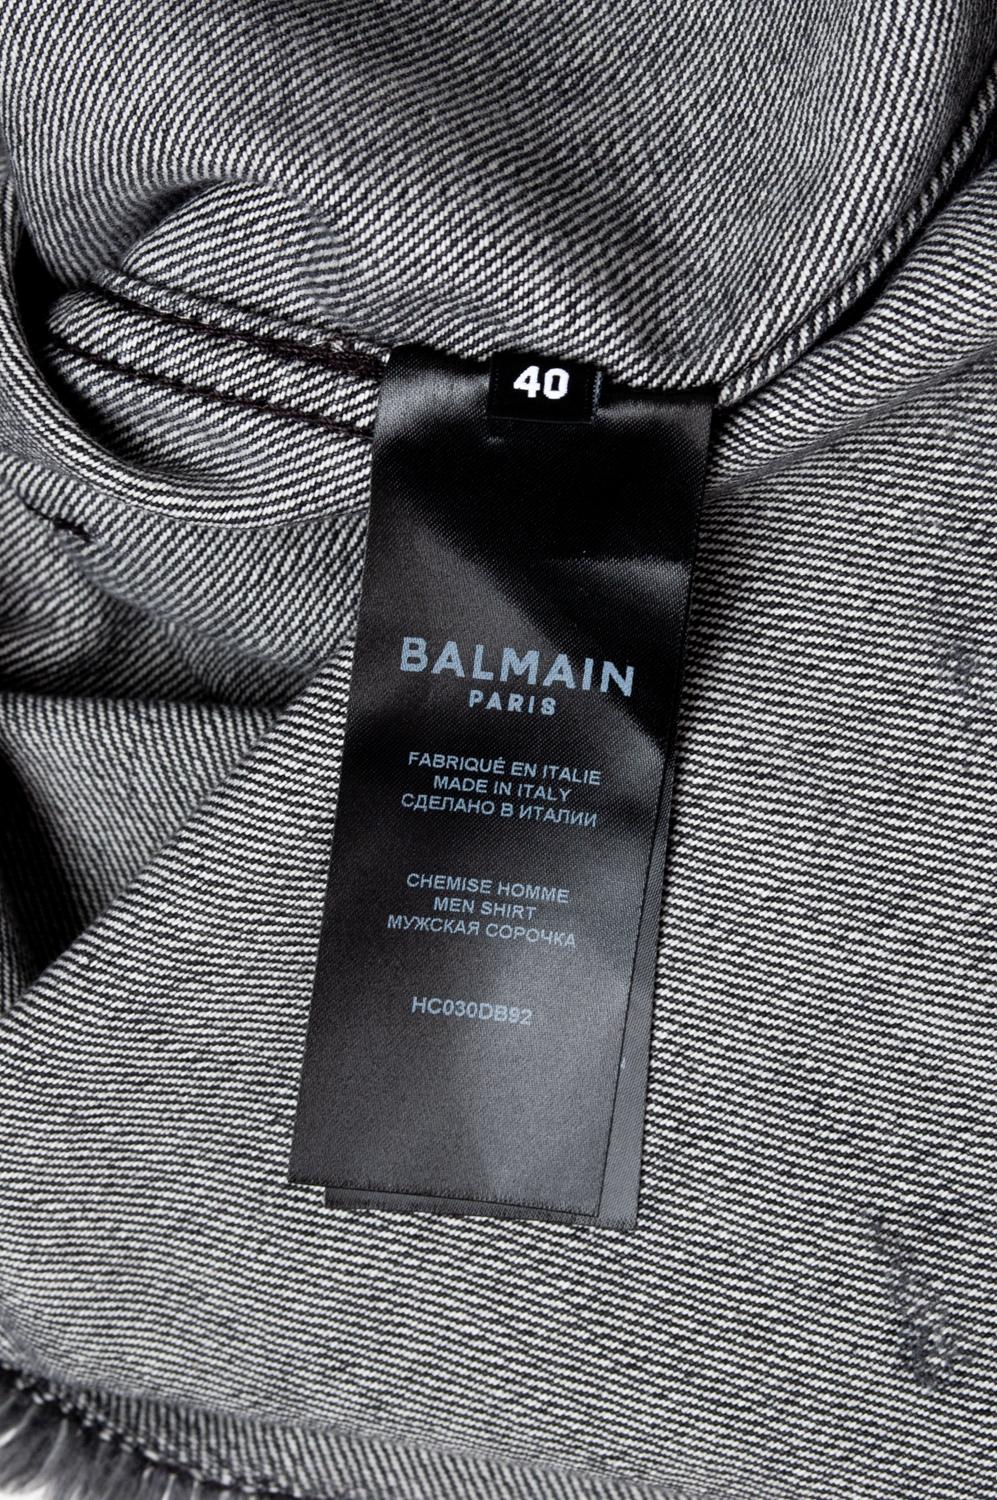 Balmain Paris Distressed Denim Over Shirt Men Jacket Size 40 (Medium) S603 For Sale 2